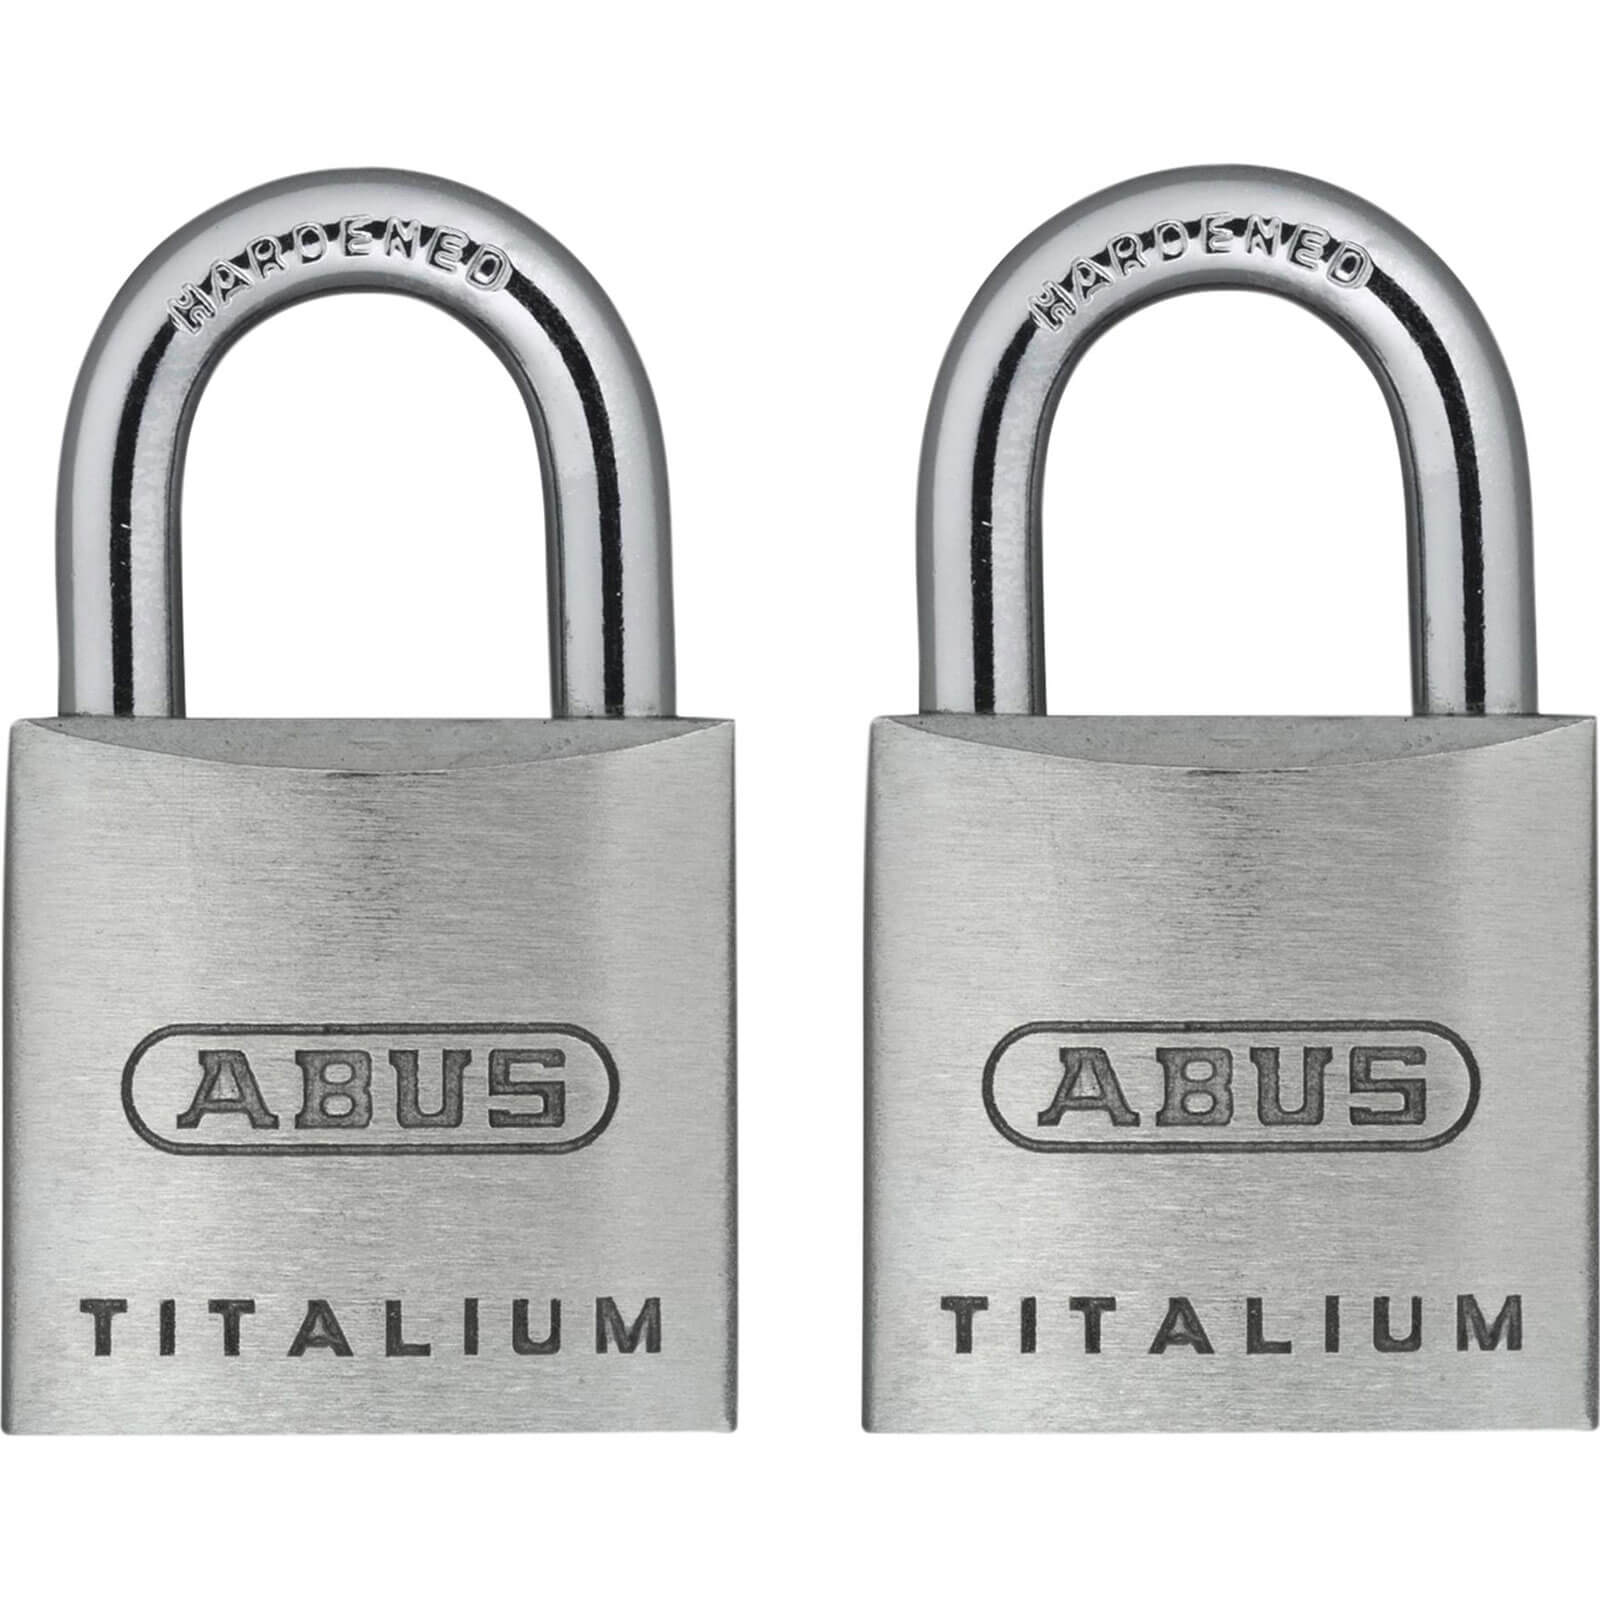 Image of Abus 64TI Series Titalium Padlock Pack of 2 Keyed Alike 20mm Standard